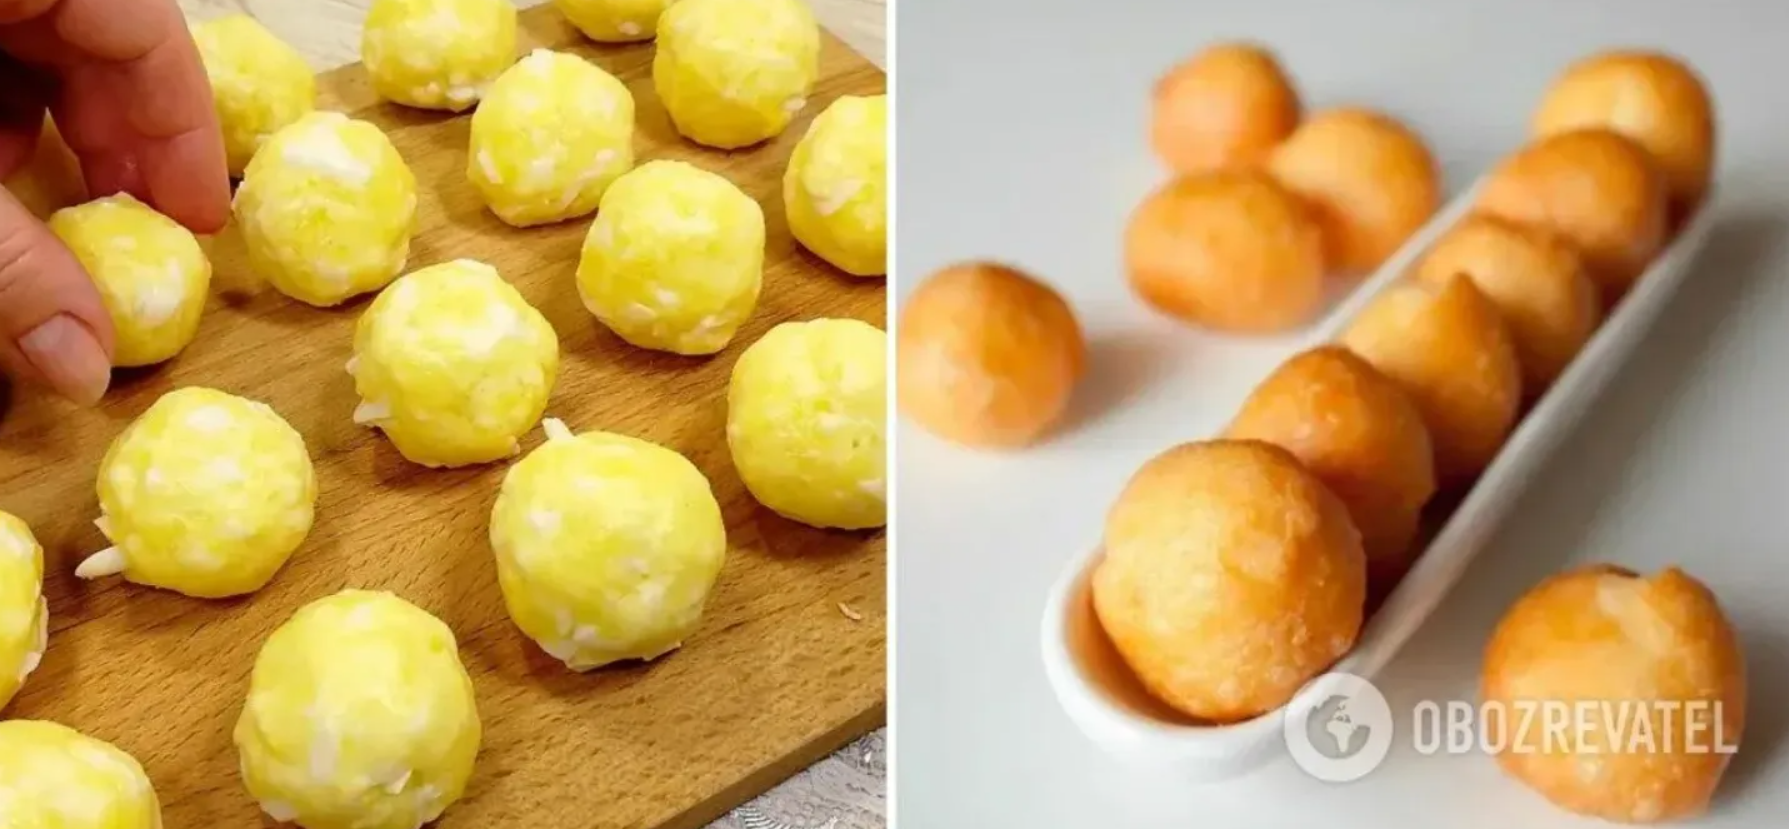 How to make mashed potato and cheese balls